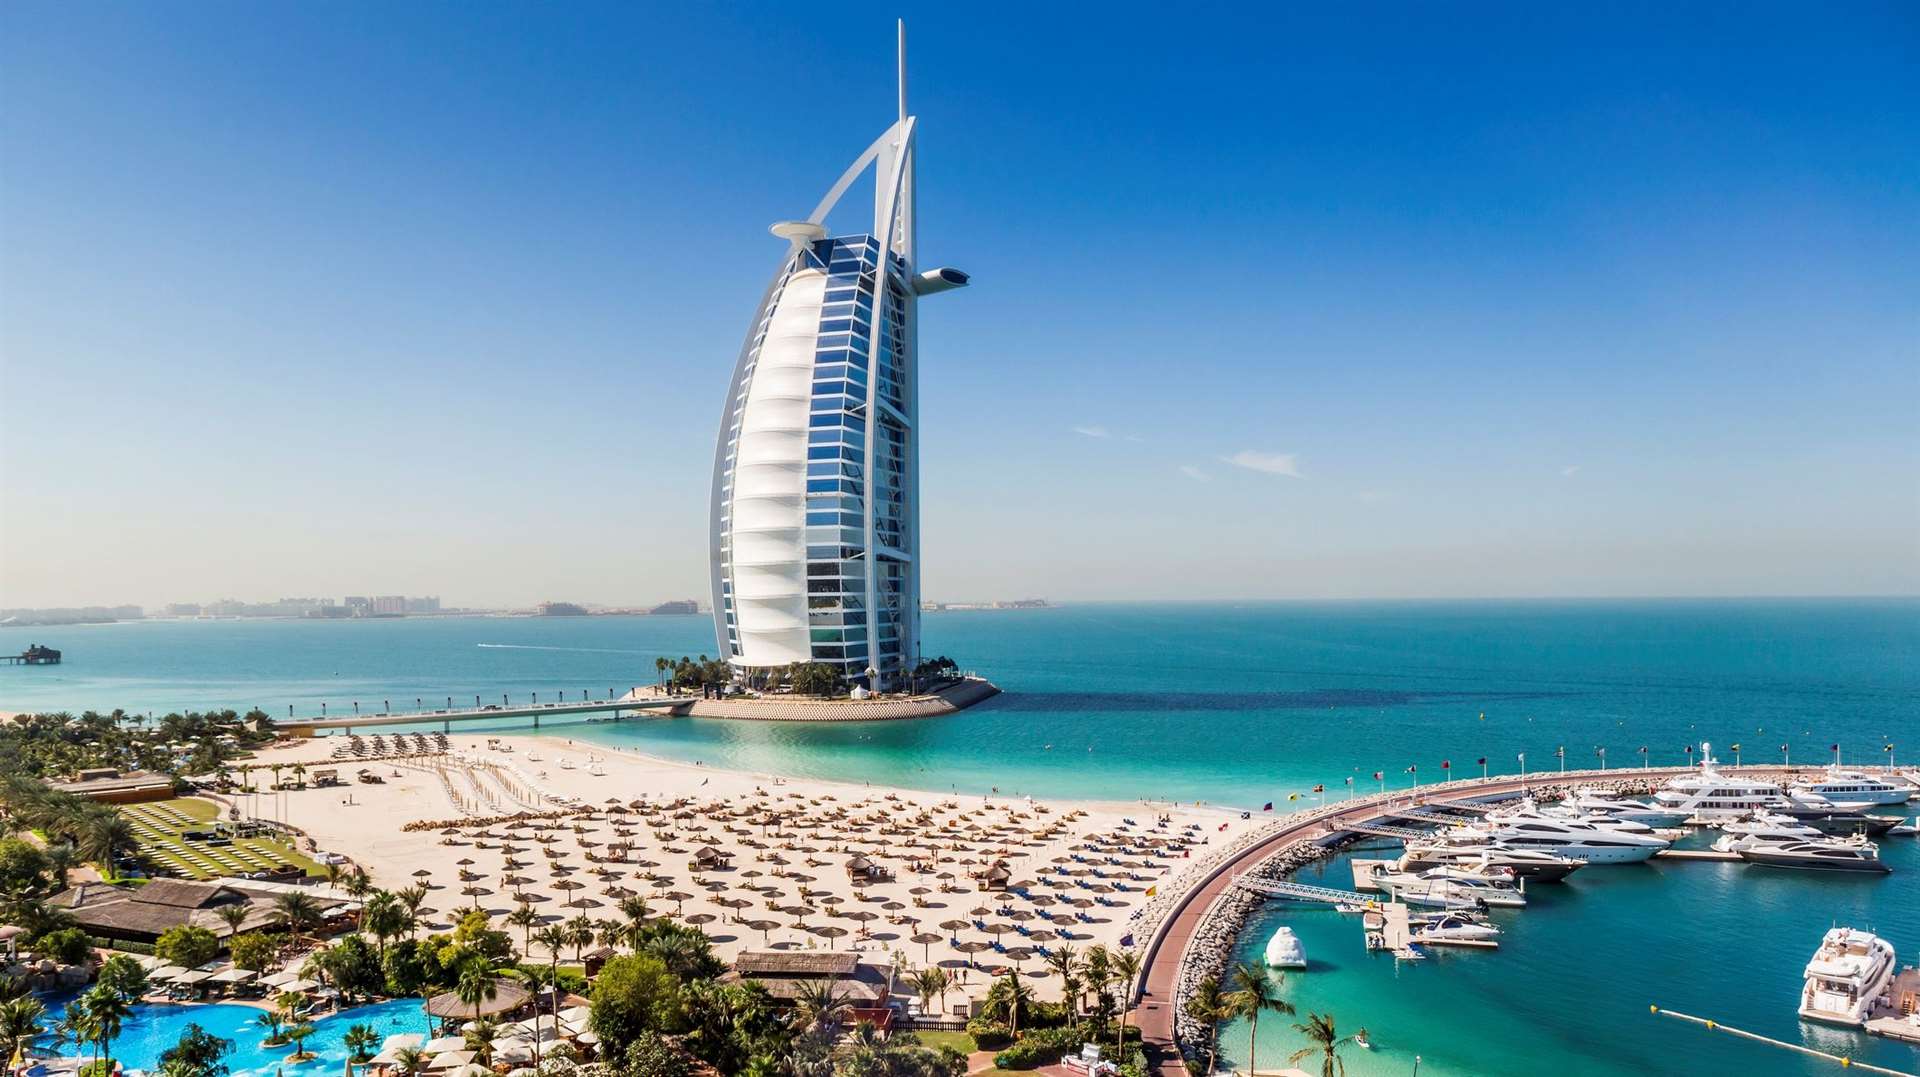 Marina and beach view of the Burj Al Arab hotel in Dubai PHOTO: iStock Joni_R